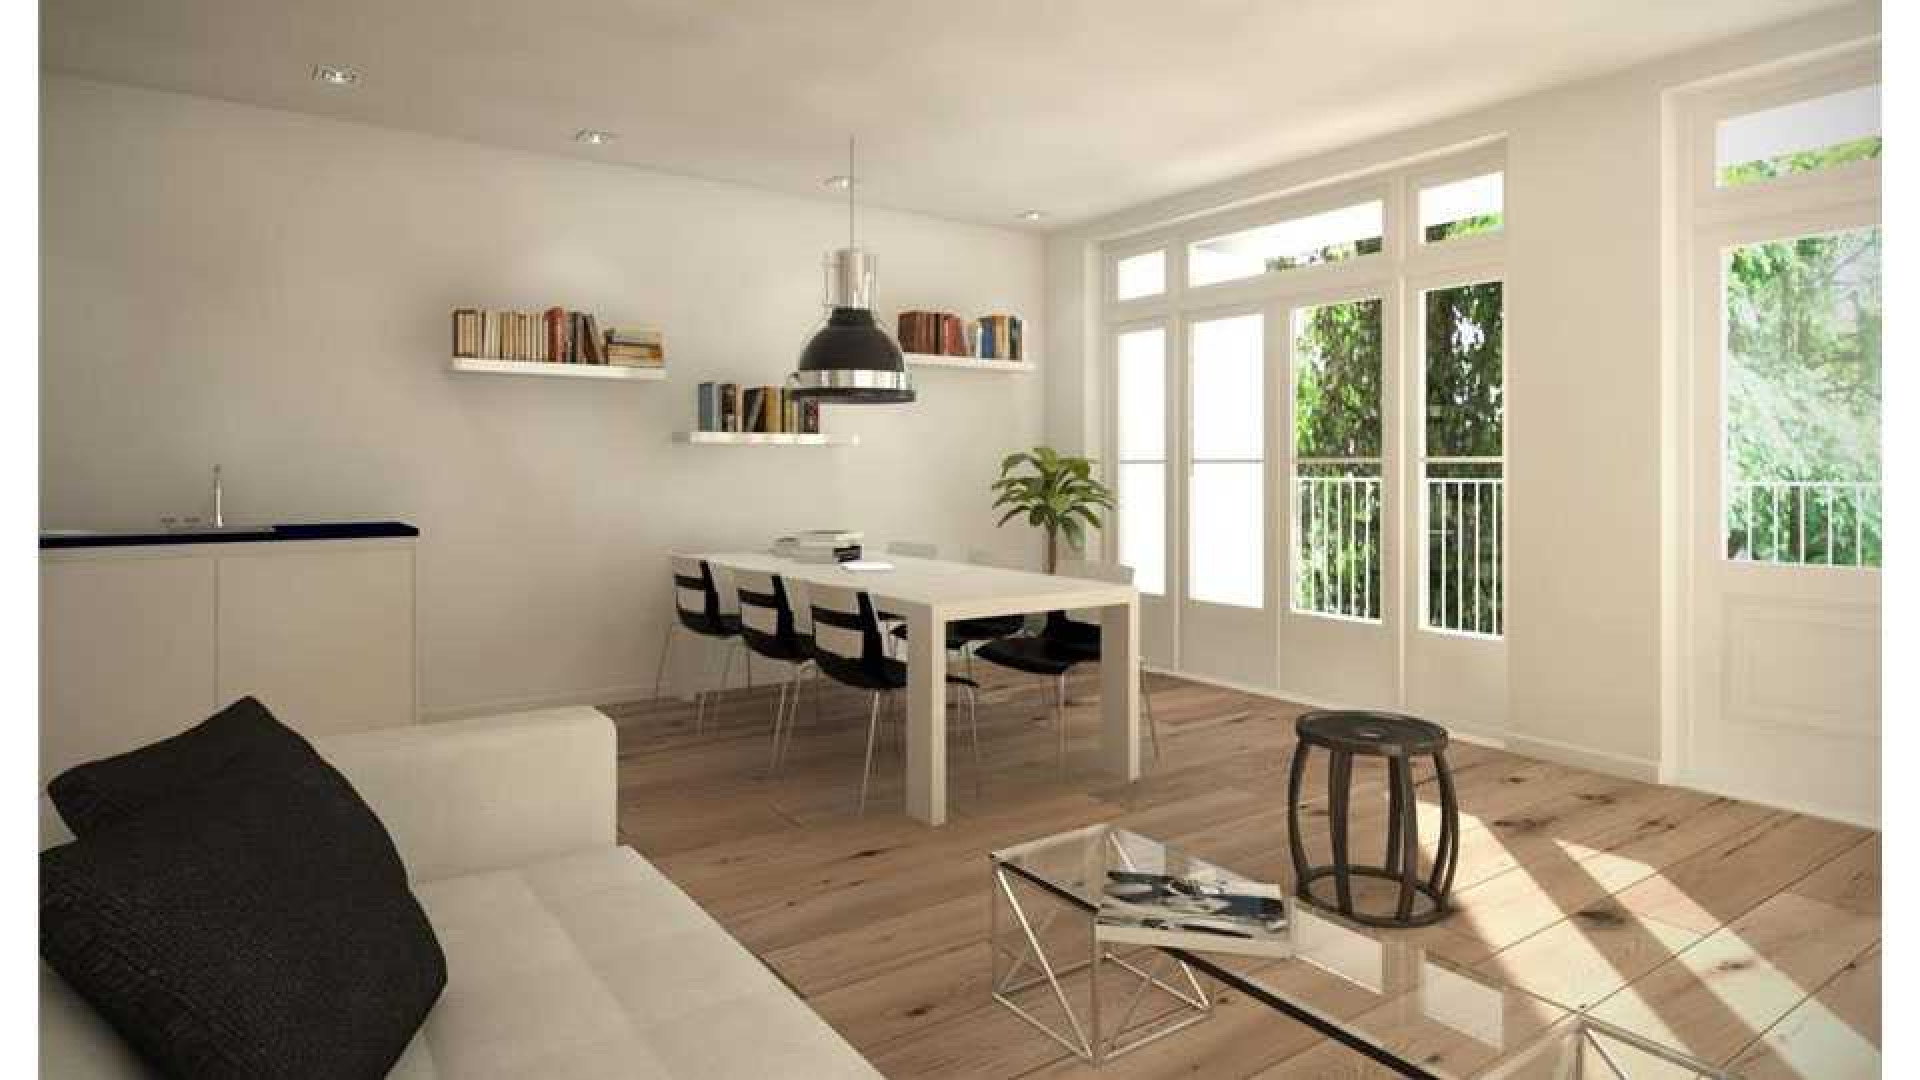 Khalid Boulahrouz koopt dubbel appartement in Amsterdam. Zie foto's 3